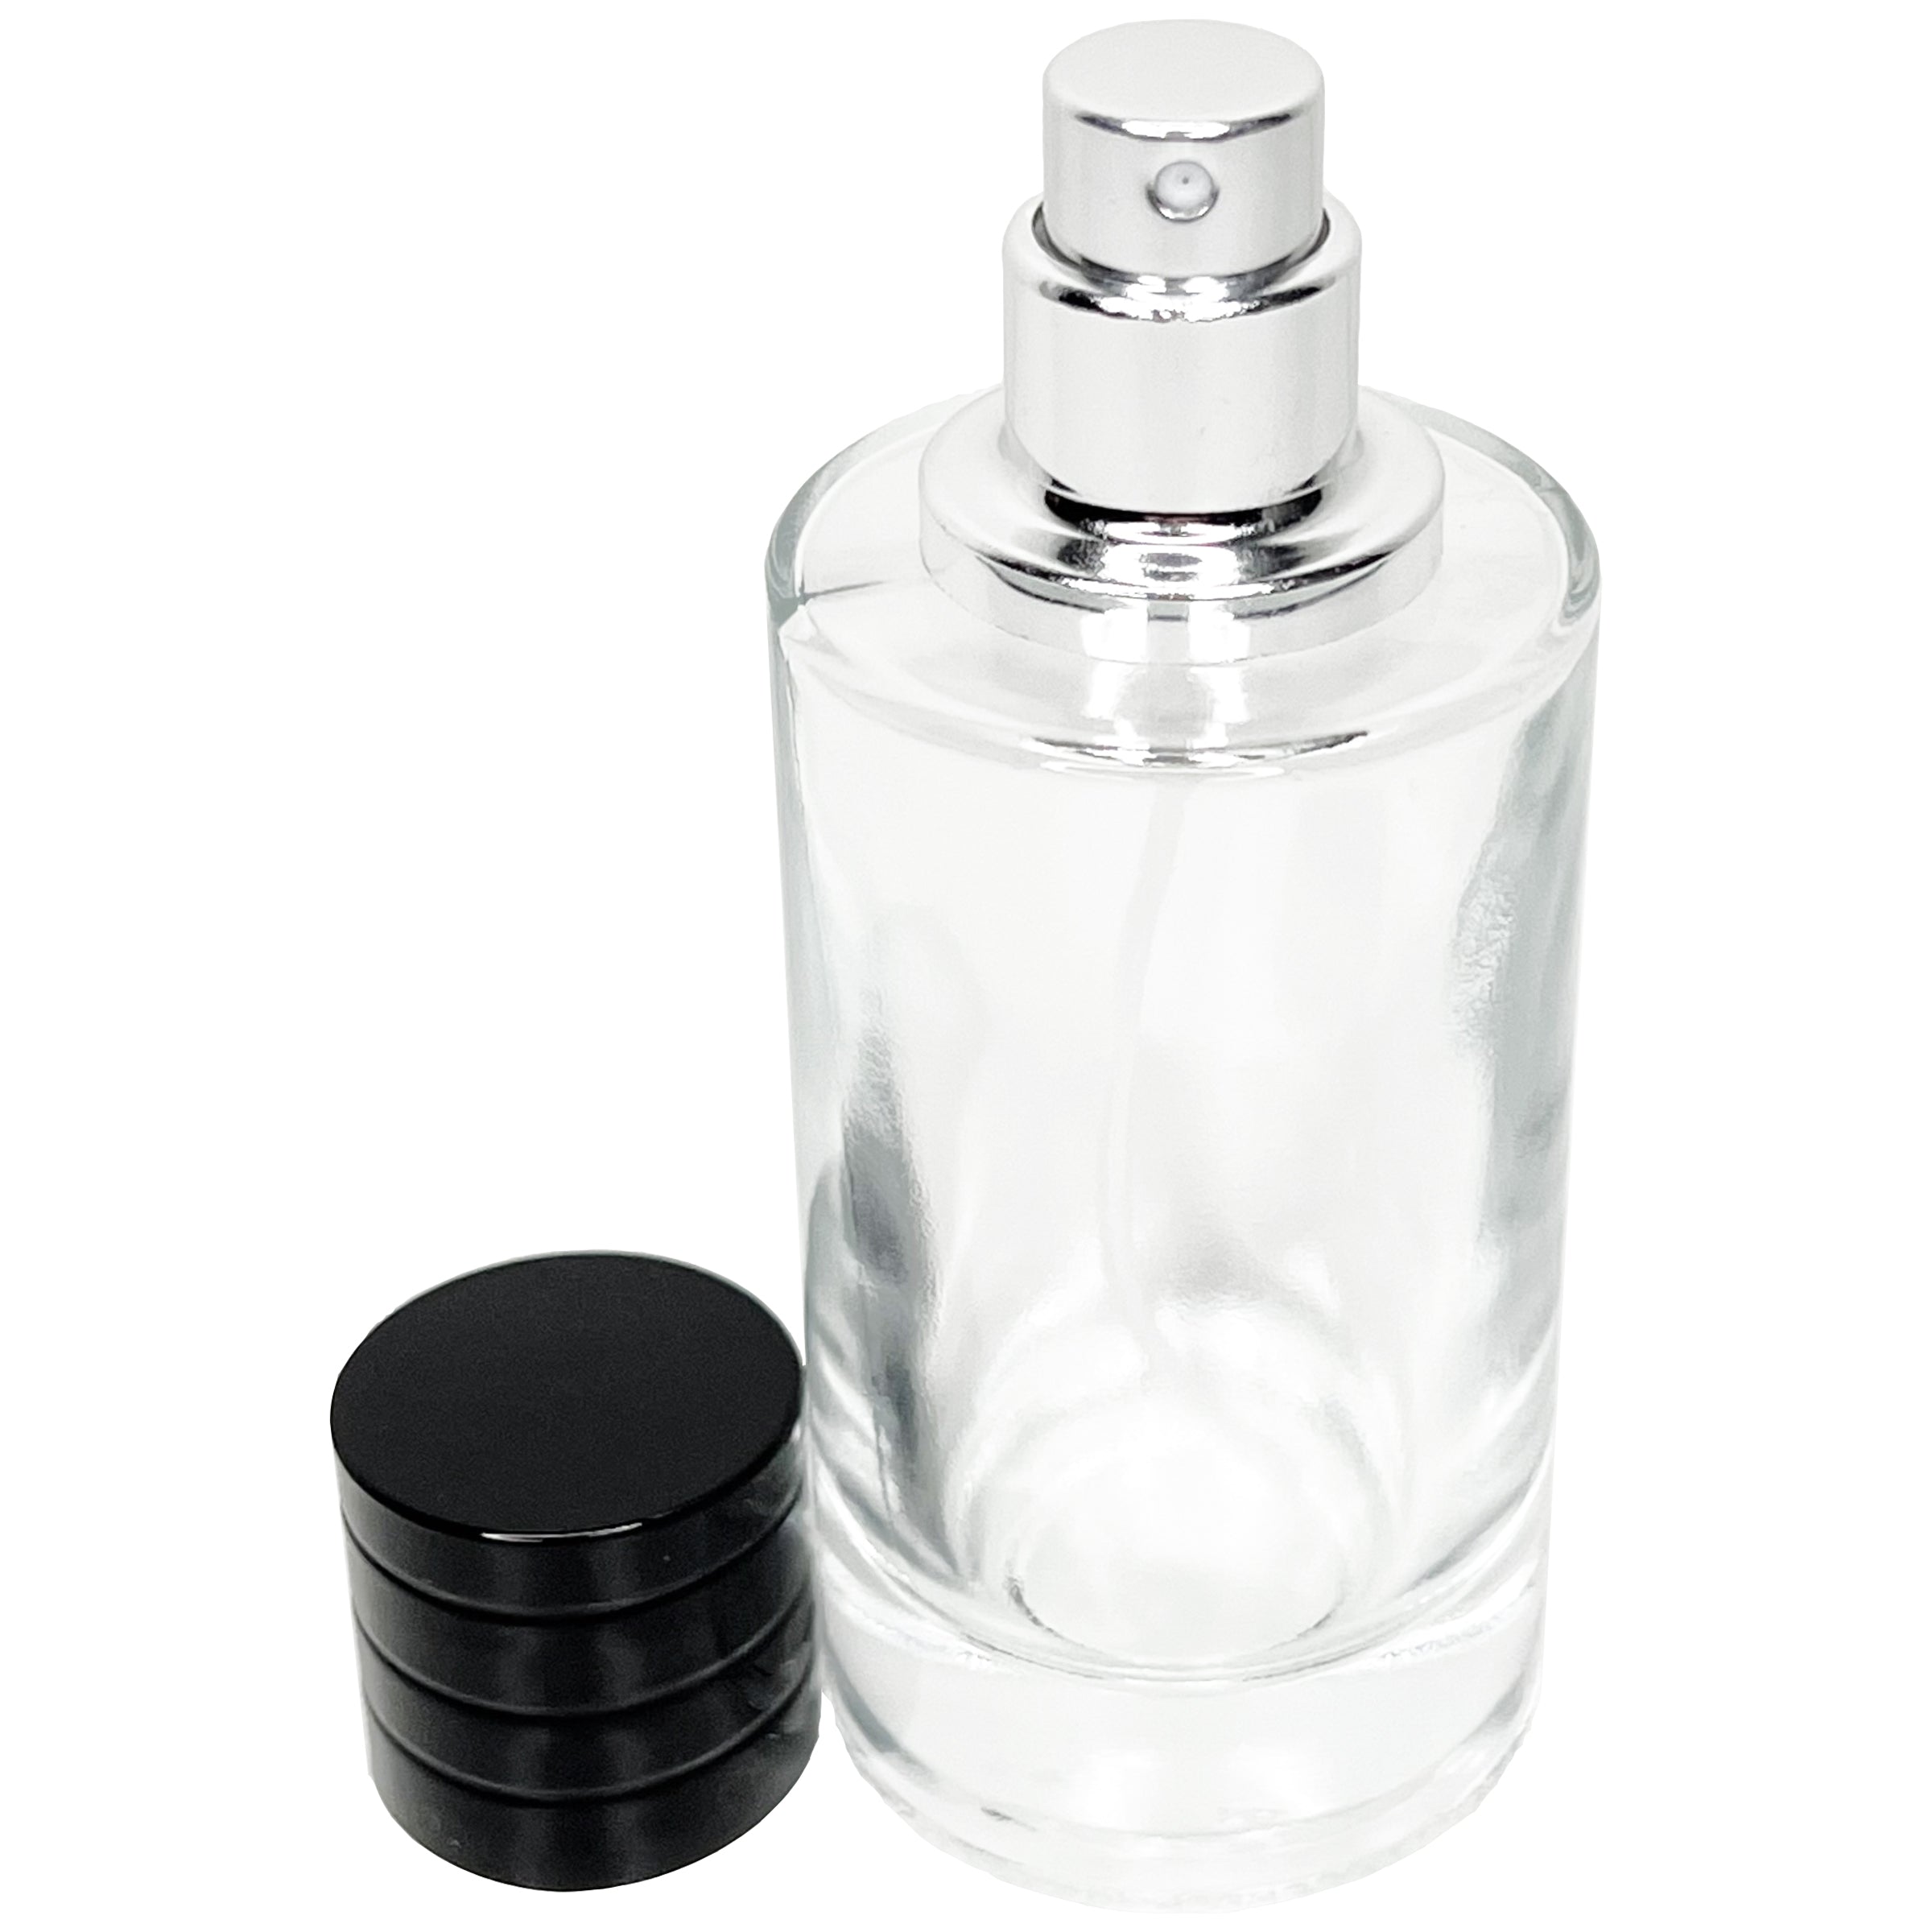 50ml 1.7oz thick glass empty perfume spray bottle black cap silver atomizer